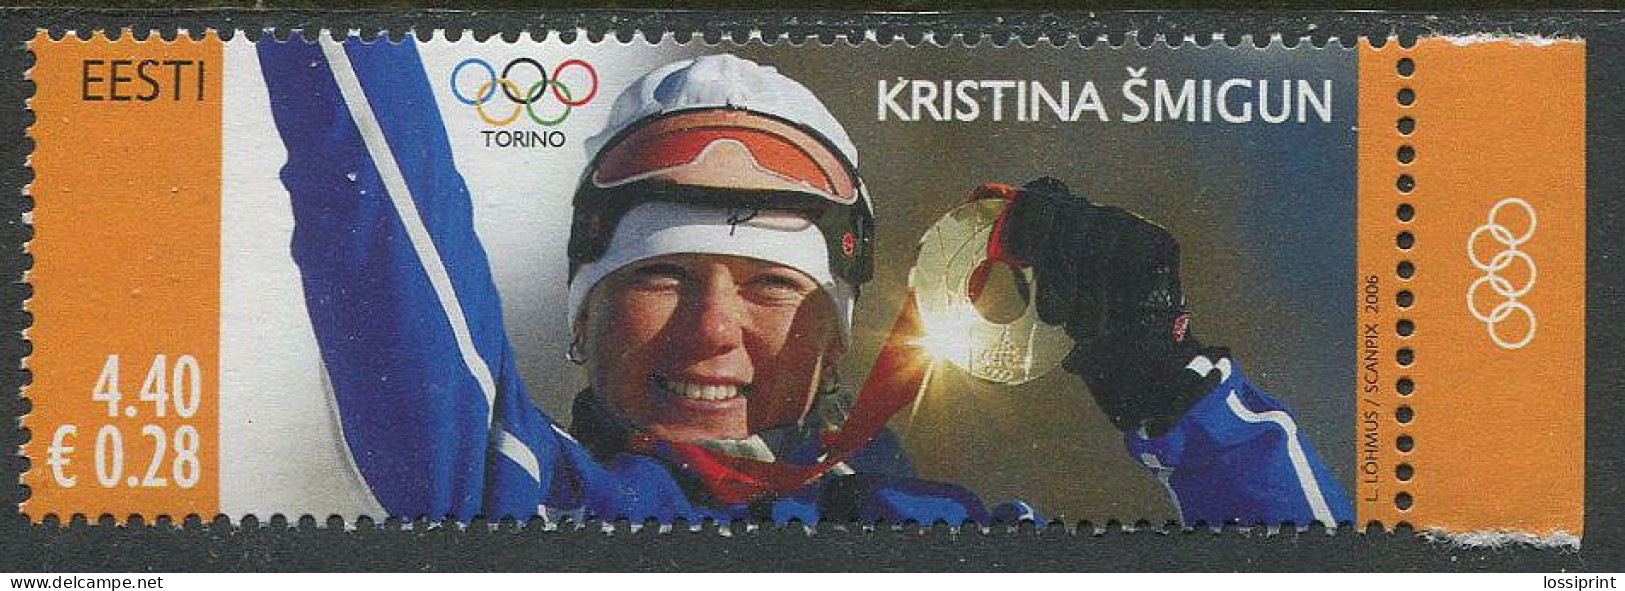 Estonia:Unused Stamp Torino Olympic Games, Olympic Champion Kristiina Šmigun, 2006, MNH - Hiver 2006: Torino